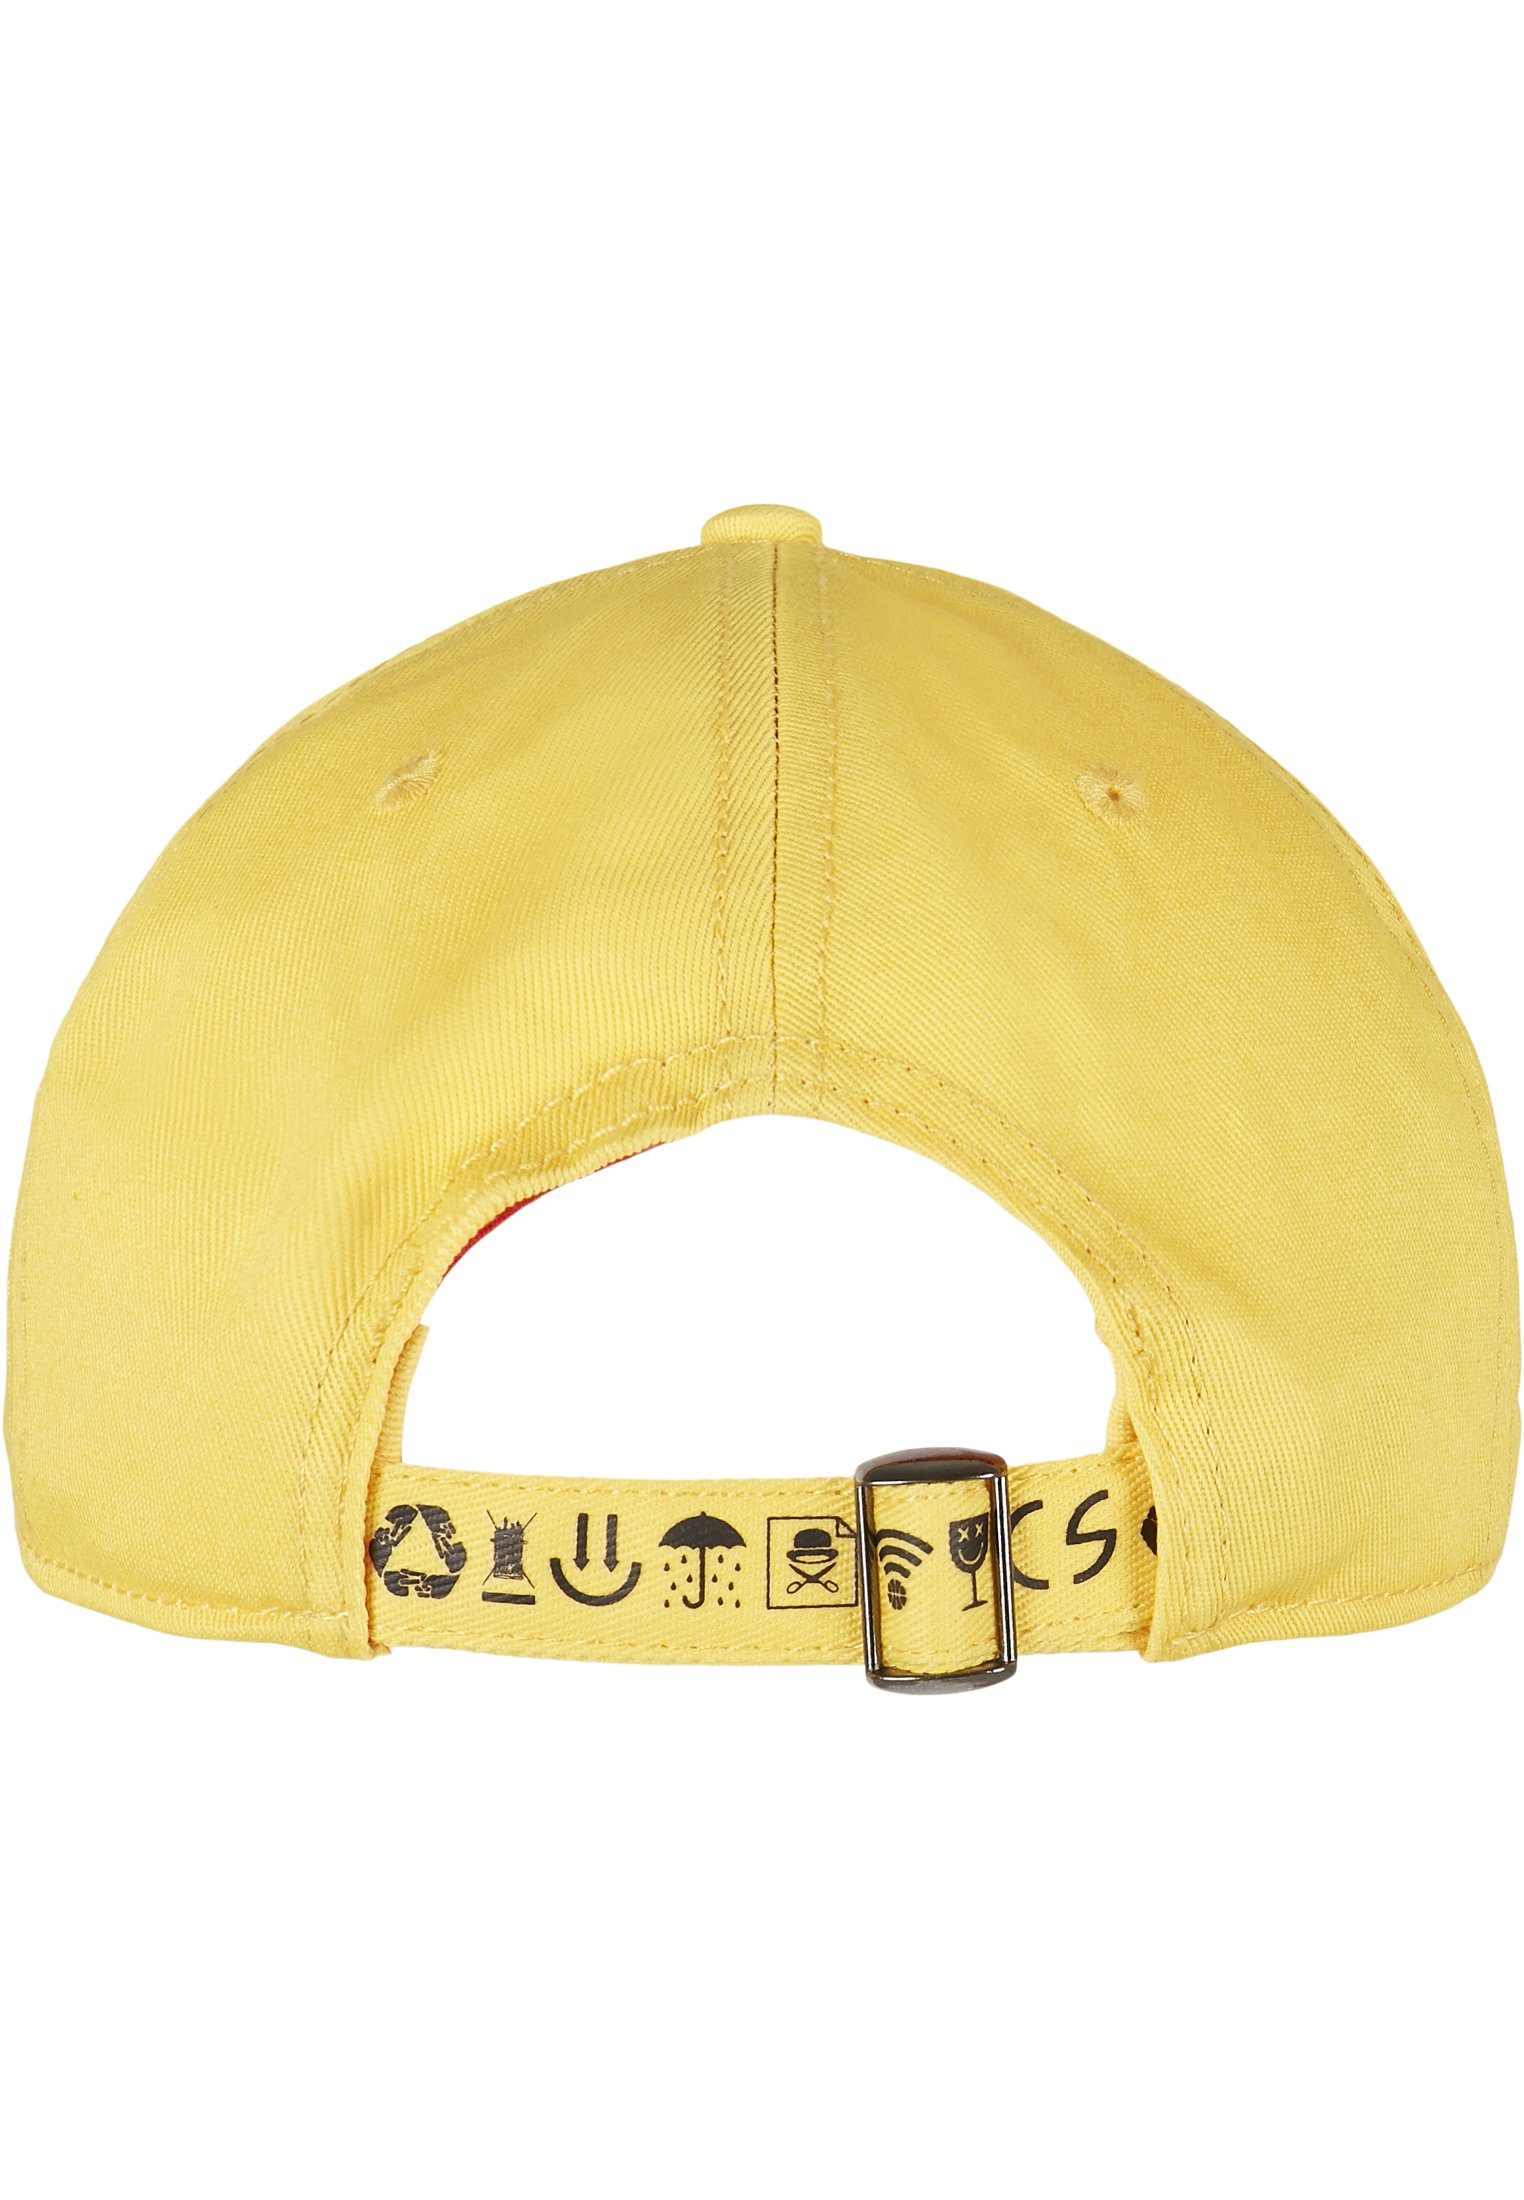 CAYLER & C&S SONS Curved Iconic Cap yellow/multicolor Flex Cap Peace